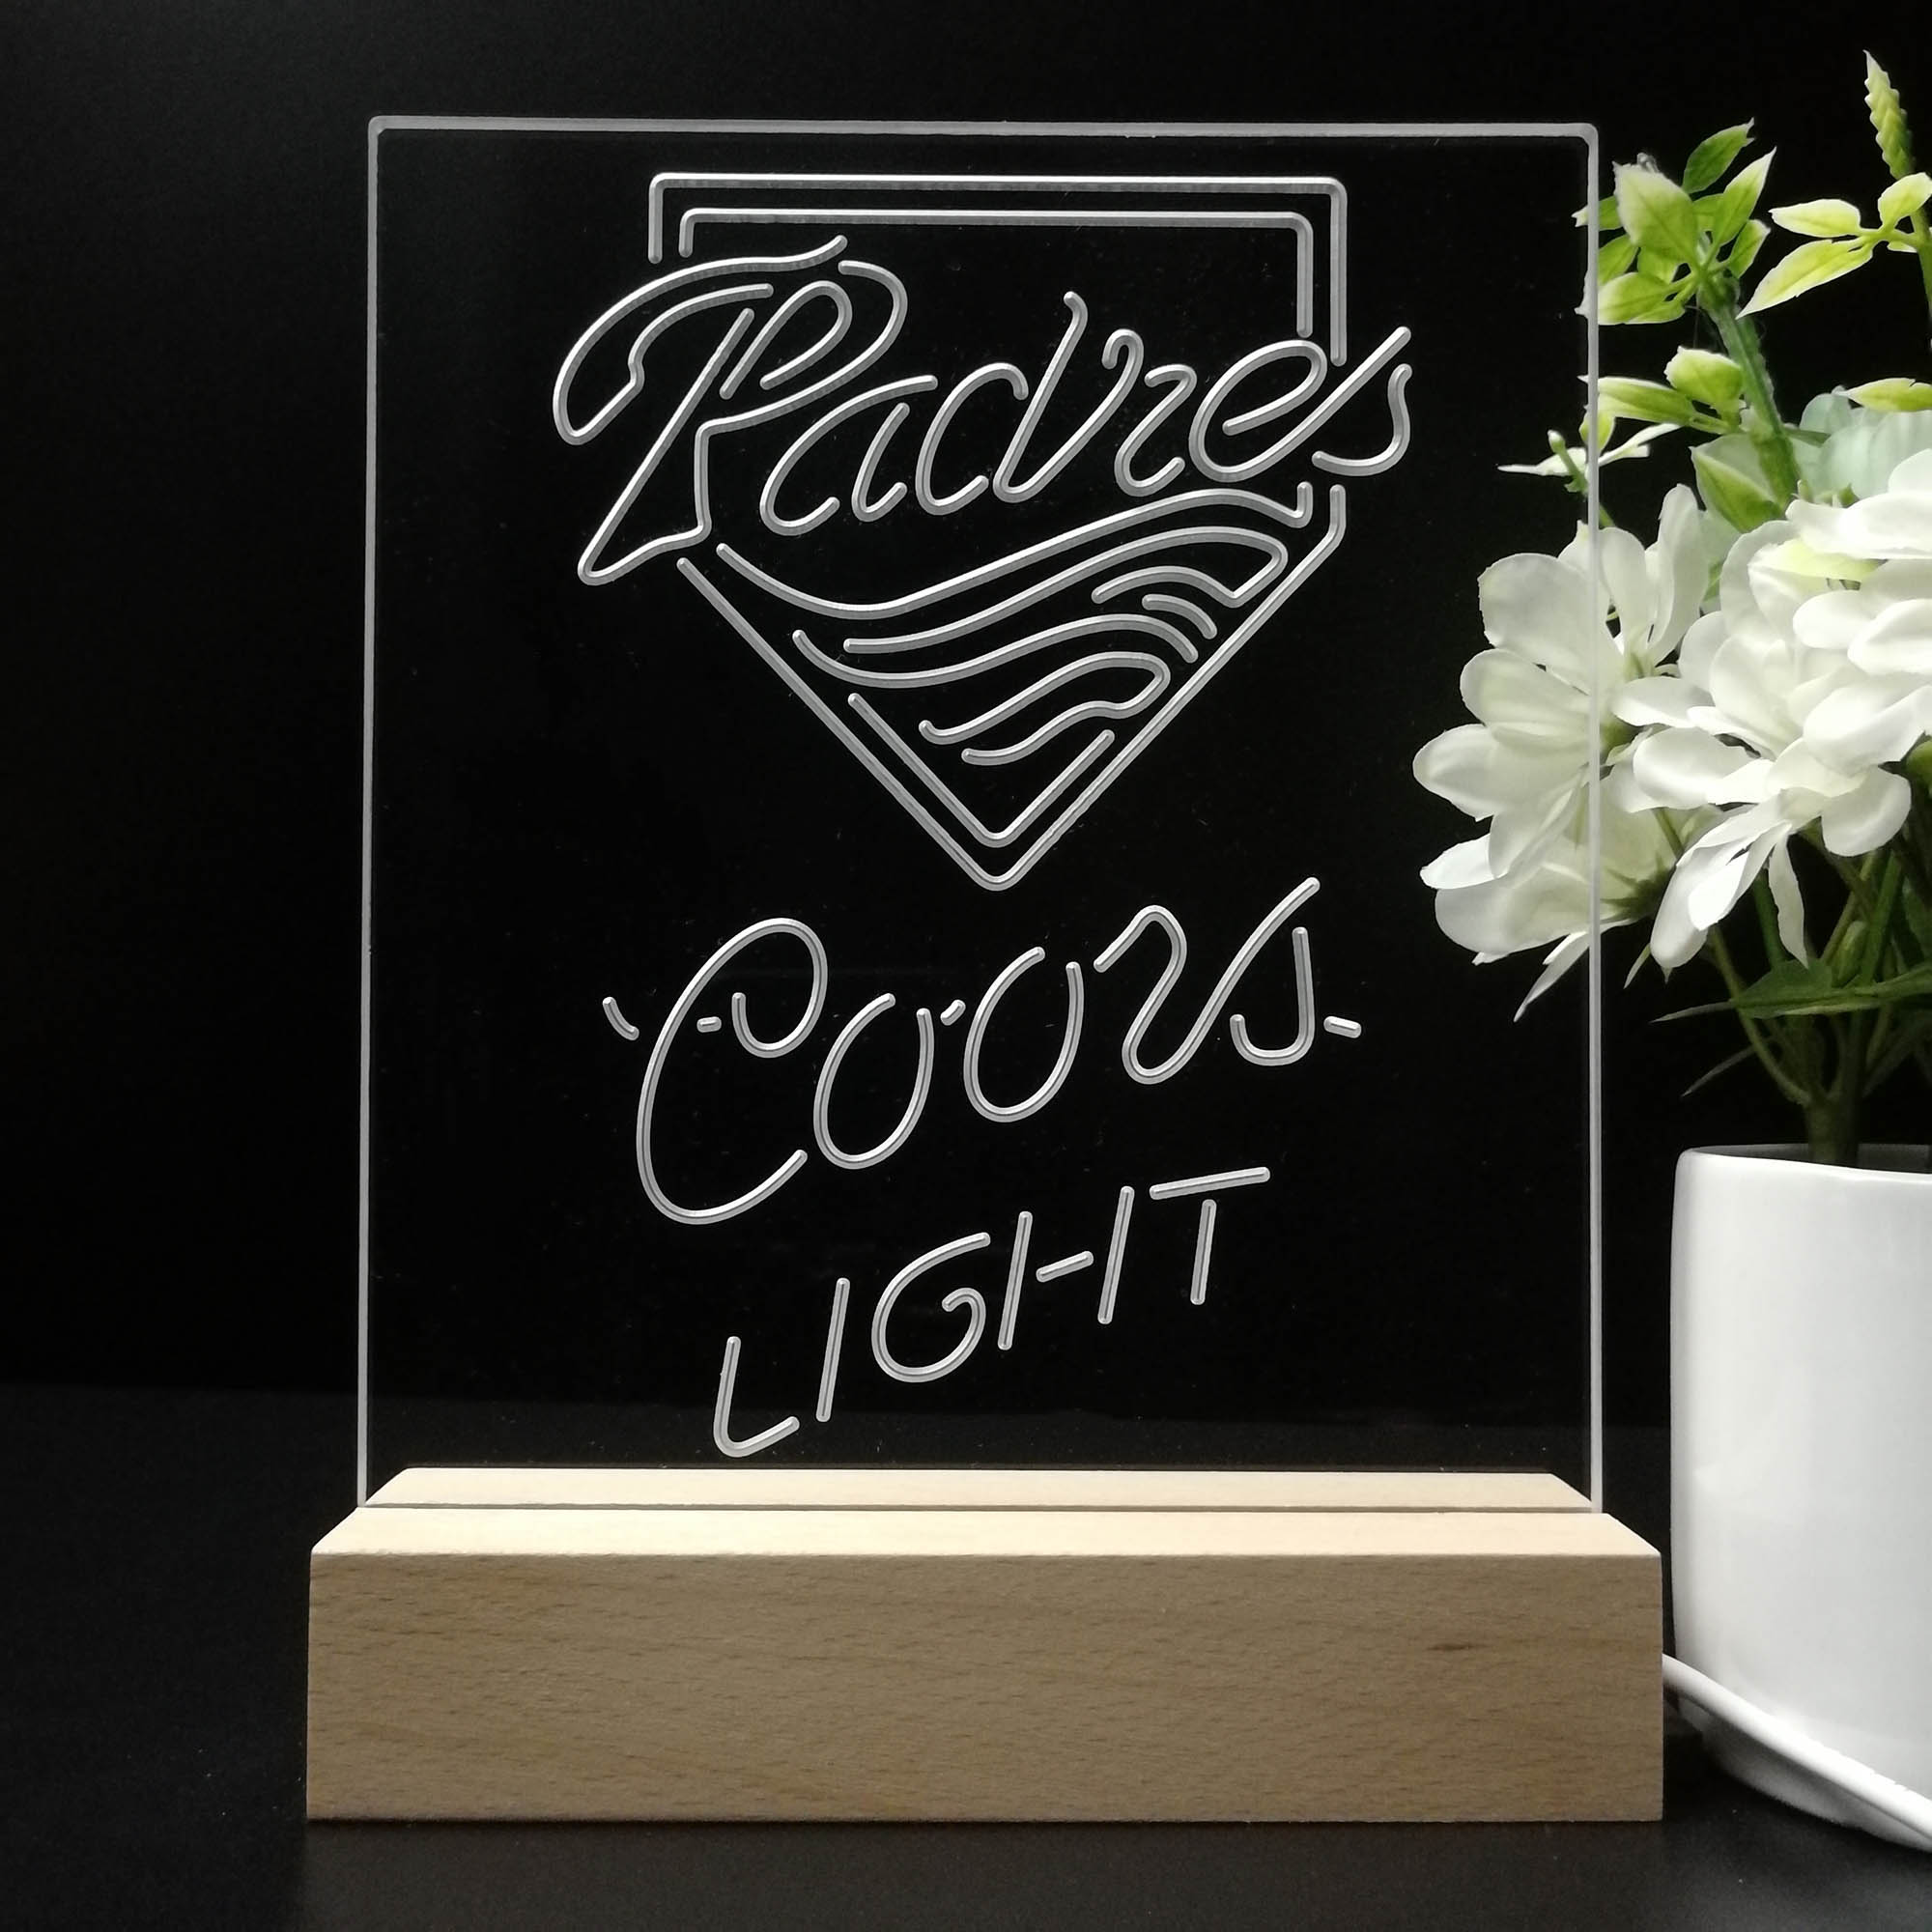 San Diego Padres Coors Light Neon Sign Pub Bar Lamp